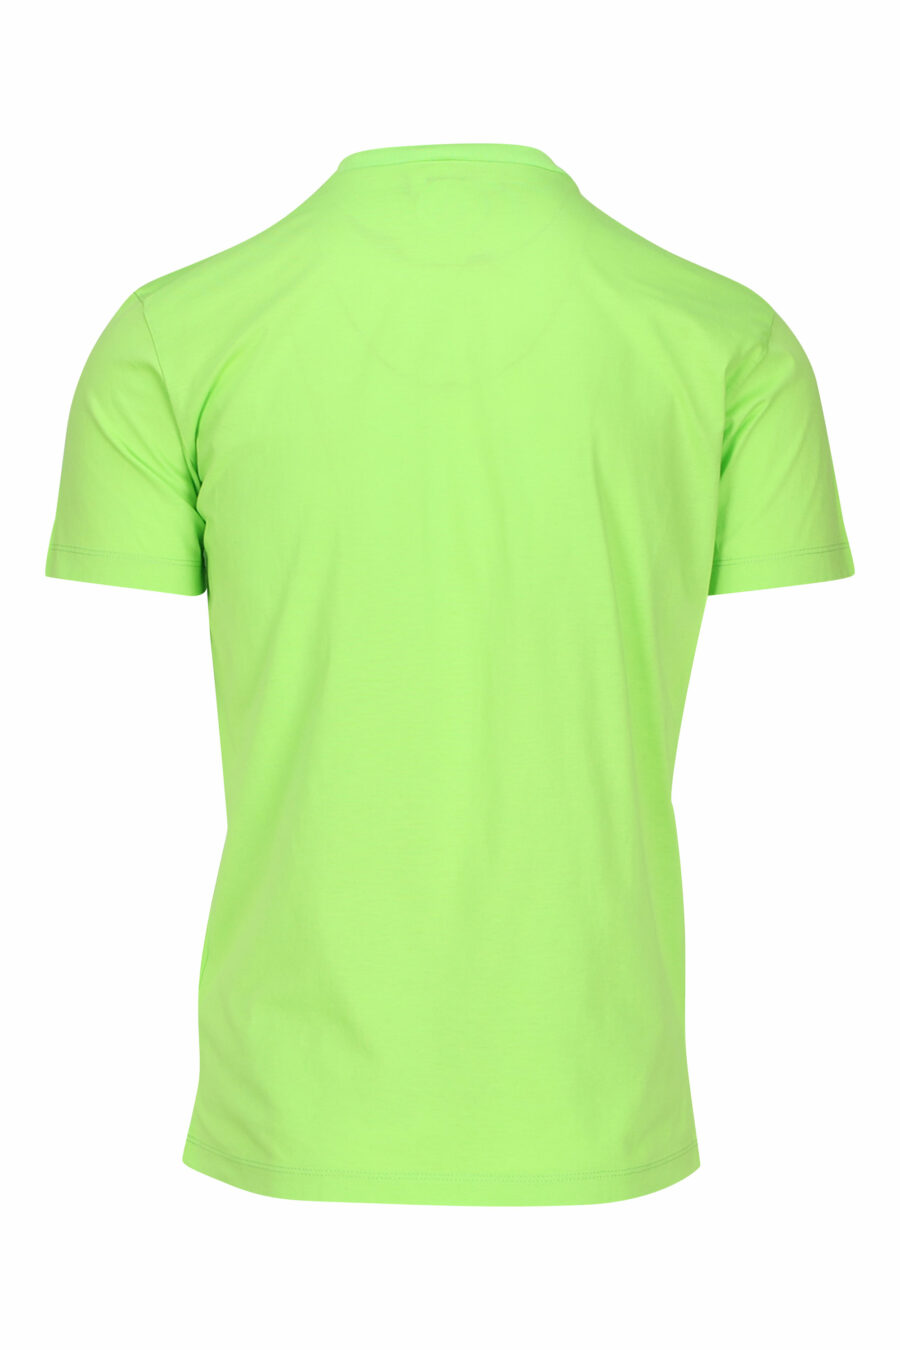 Limonengrünes T-Shirt mit schwarzem "Icon" Maxilogo - 8054148035594 1